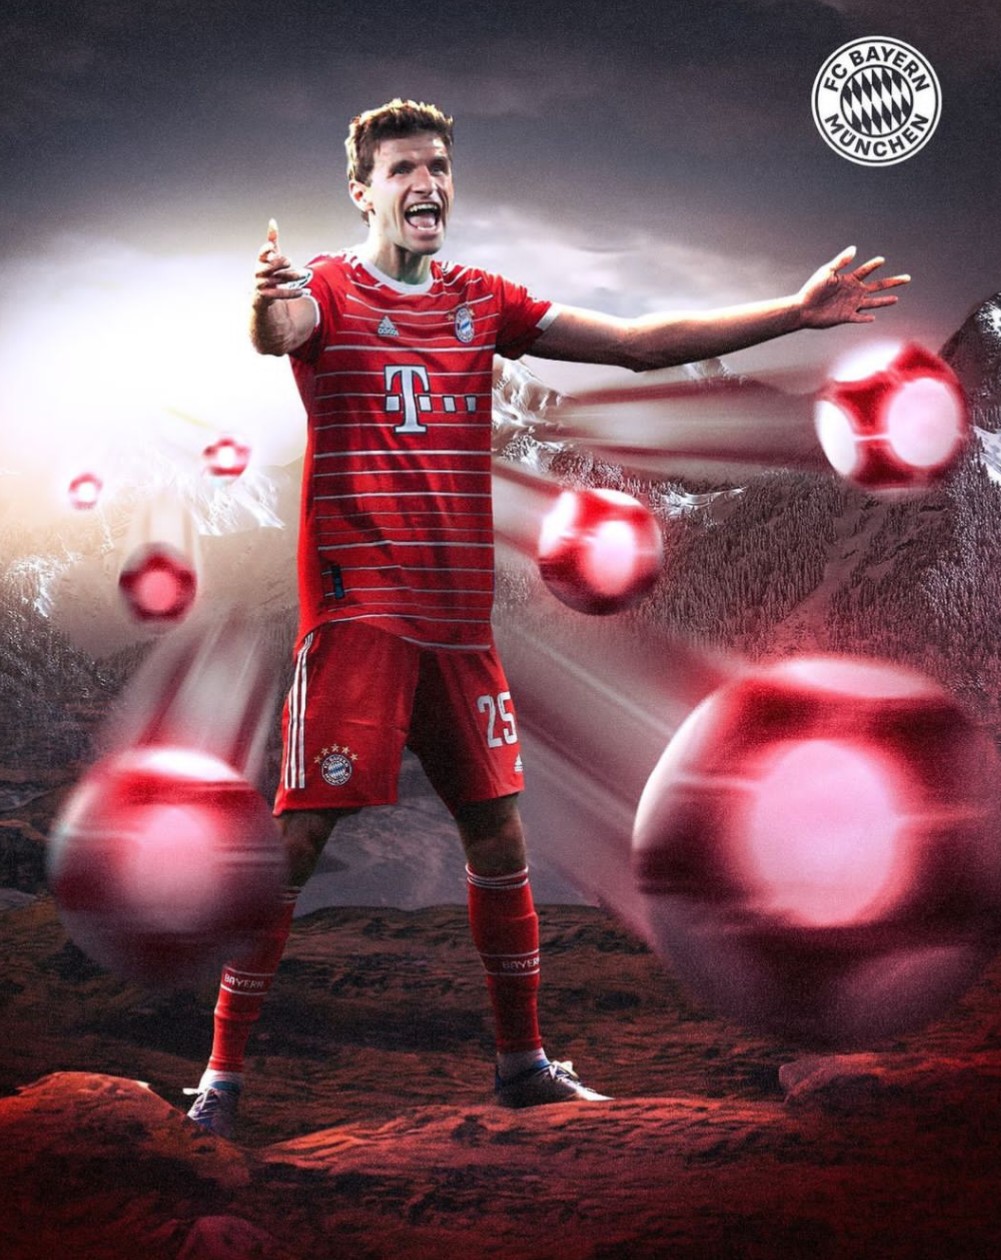 Thomas Muller, Pemain Bayern Munchen yang Sukses Cetak 2 Gol dan Bantu Bayern Munchen Bantai Dortmund. Foto: instagram.com/fcbayern